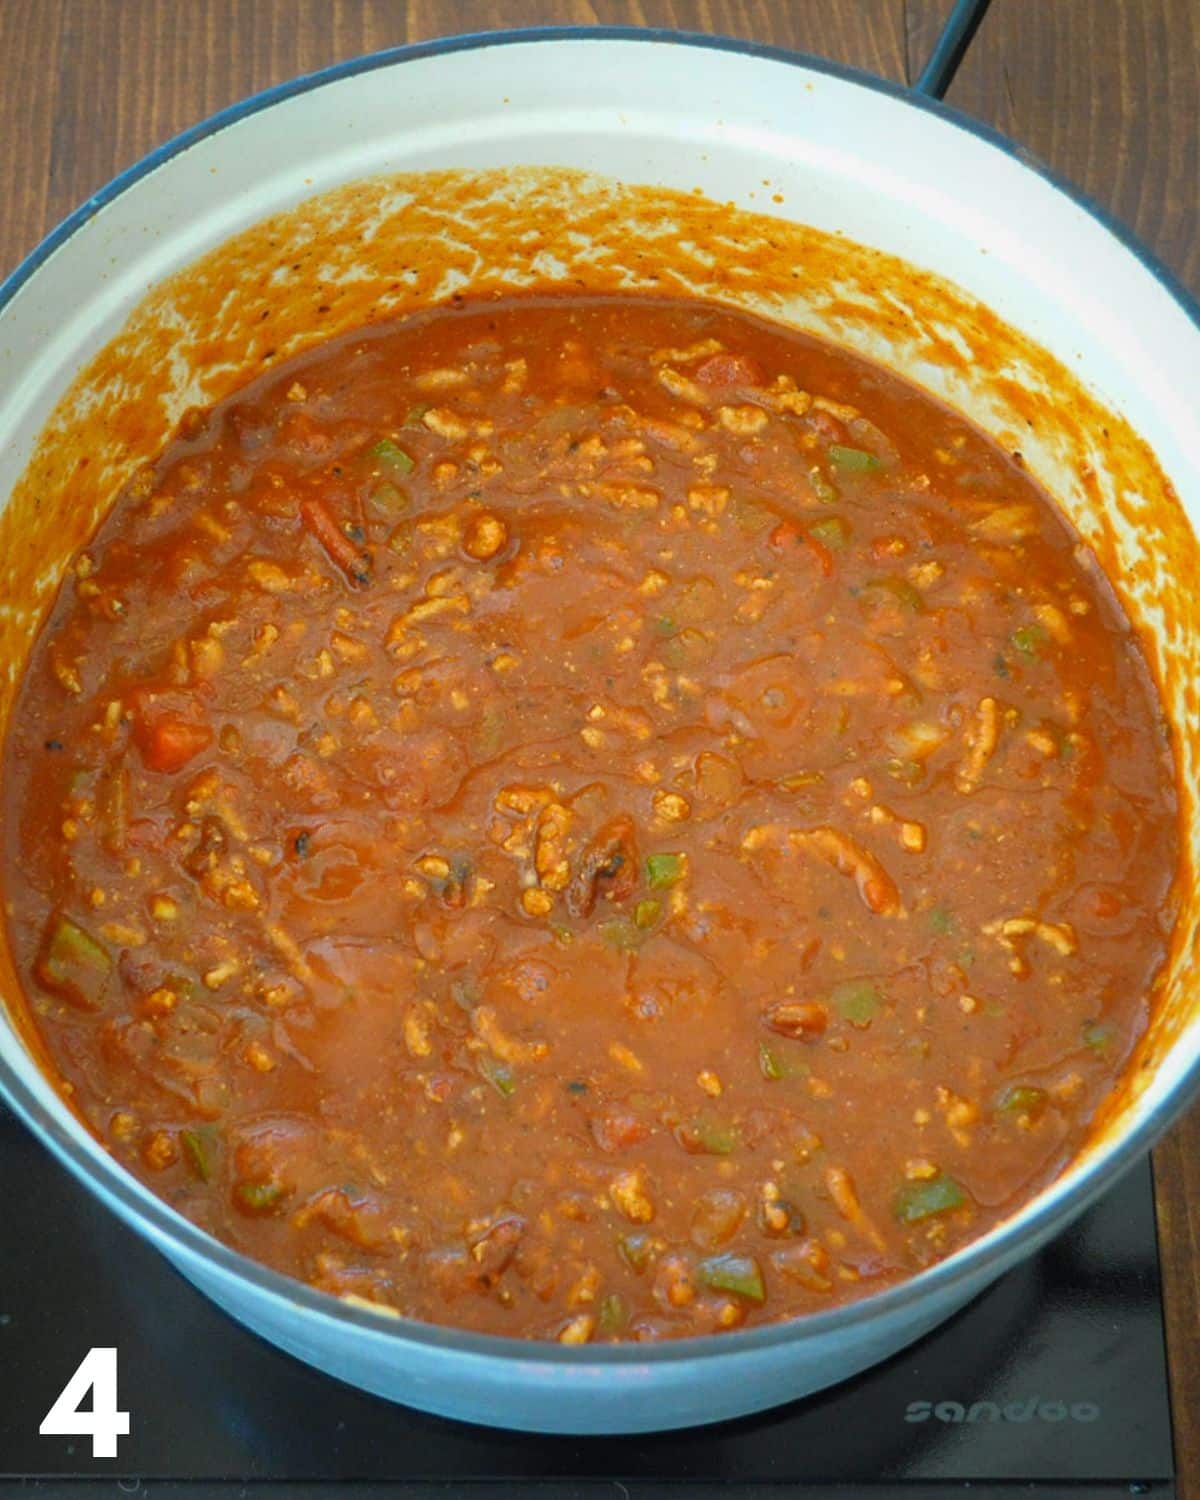 Tomato sauce added to seasoned ground turkey for chili.